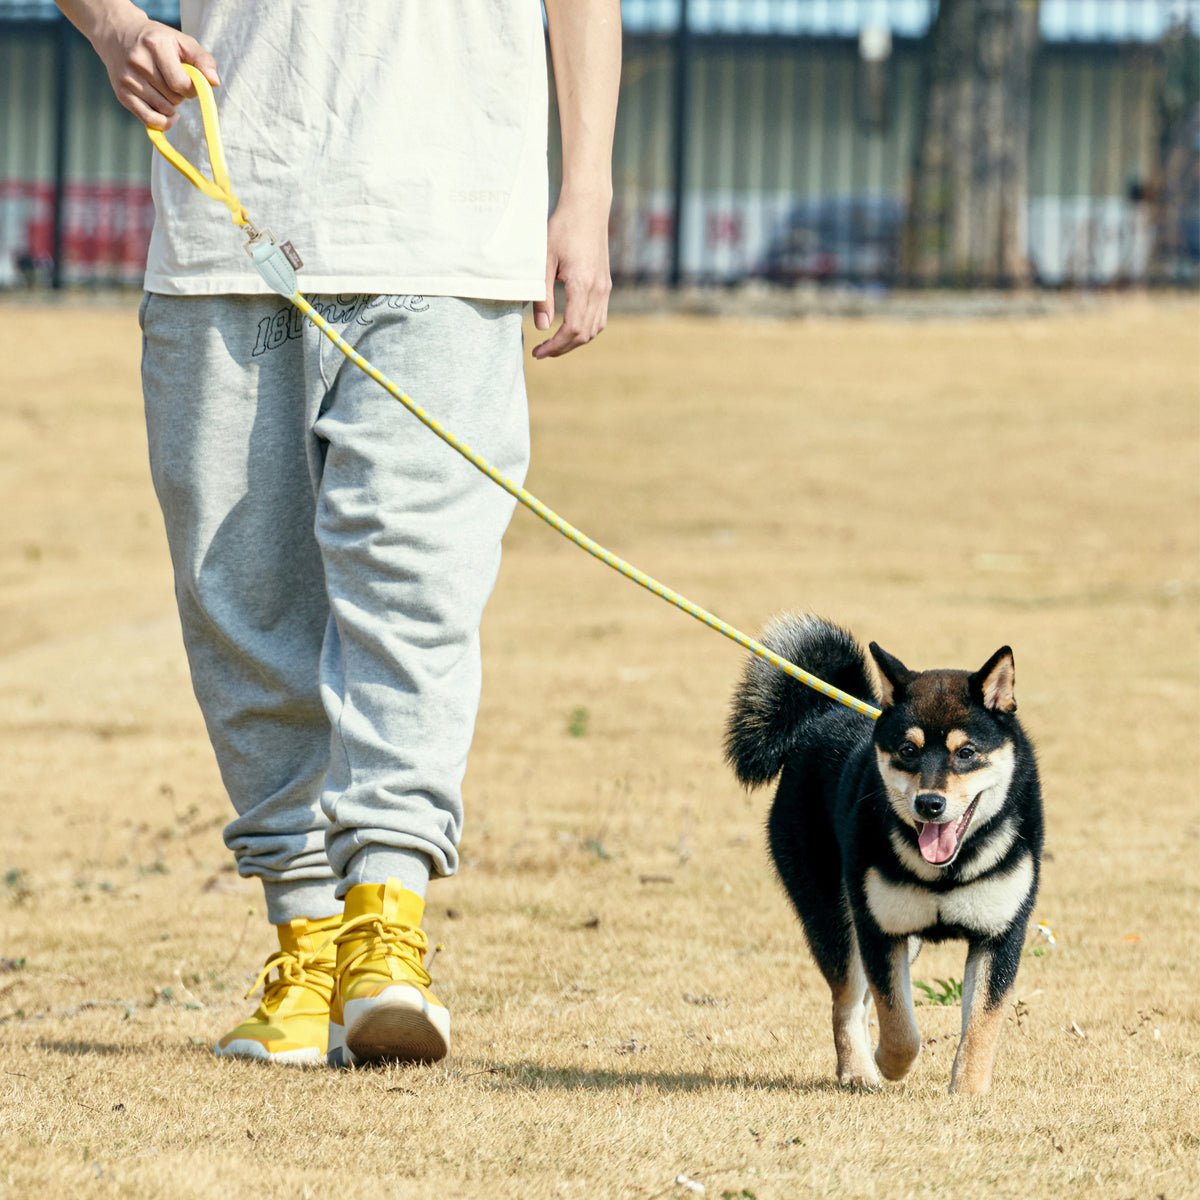 Classic Dog Slip Lead Yellow P-leash - 0cm